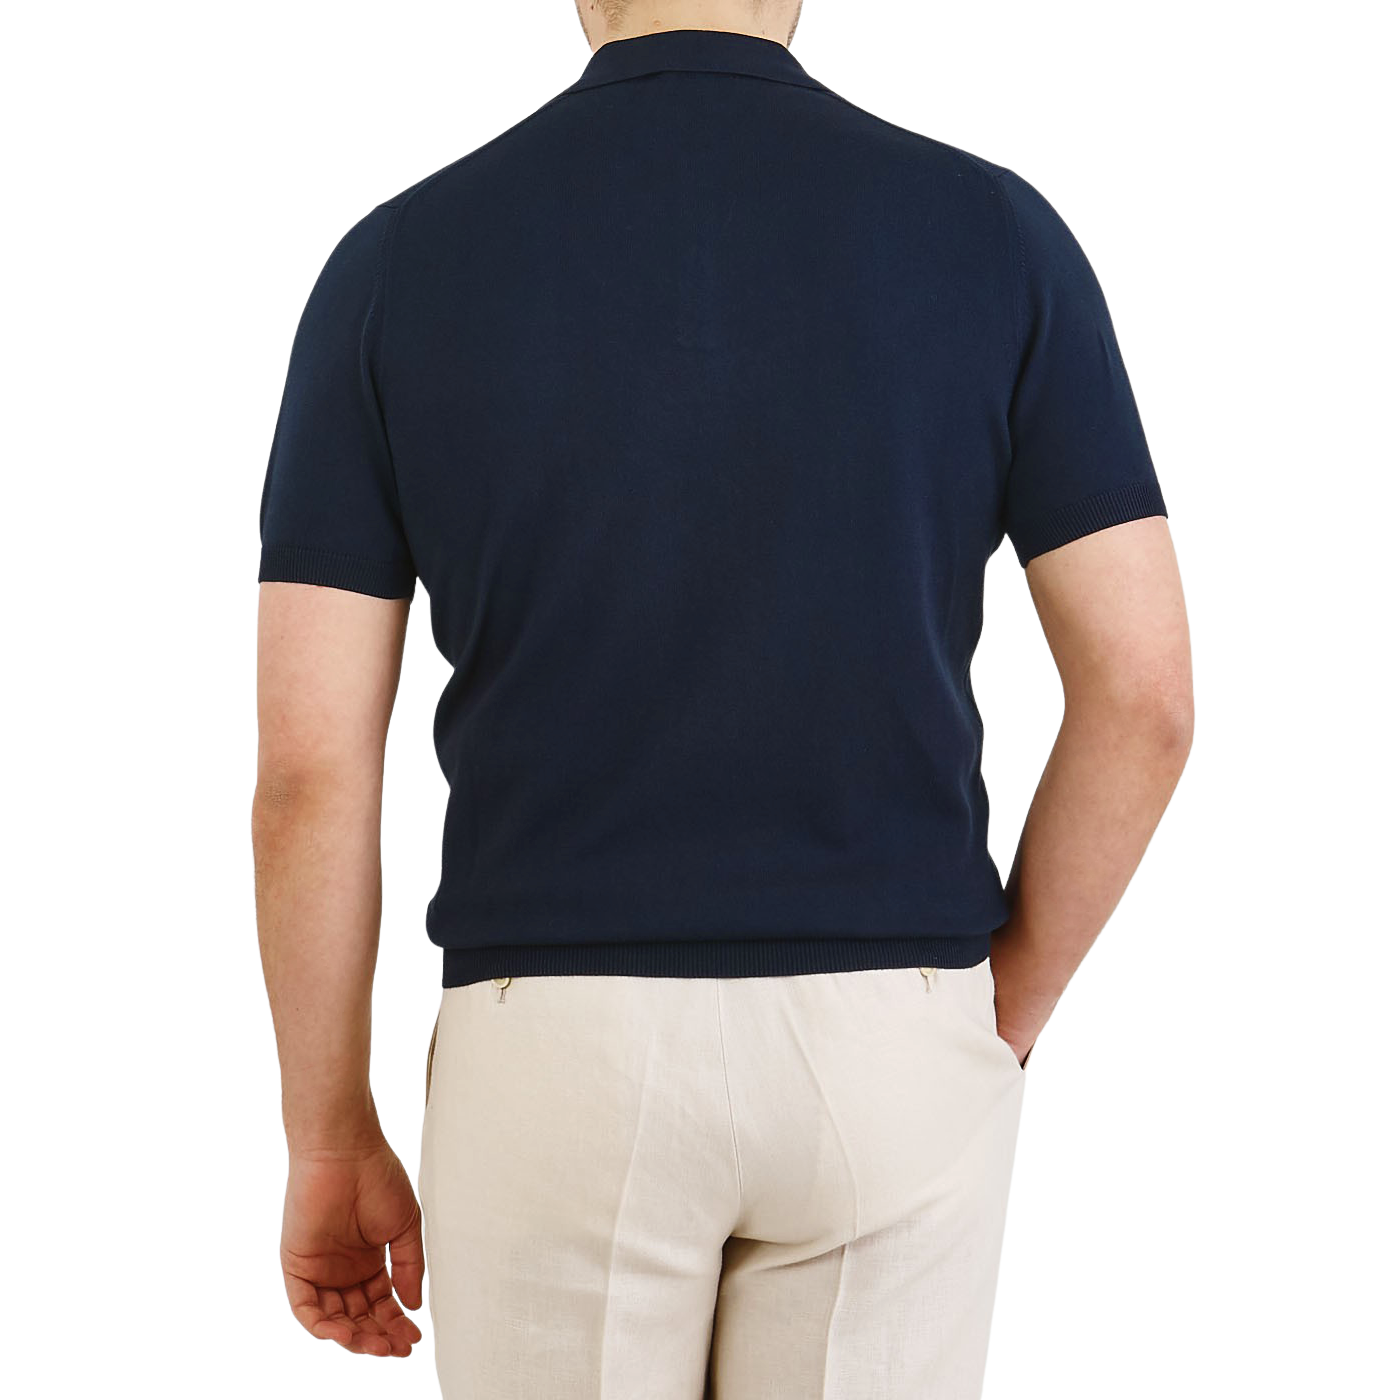 Mauro Ottaviani Navy Blue Cotton Polo Shirt Back